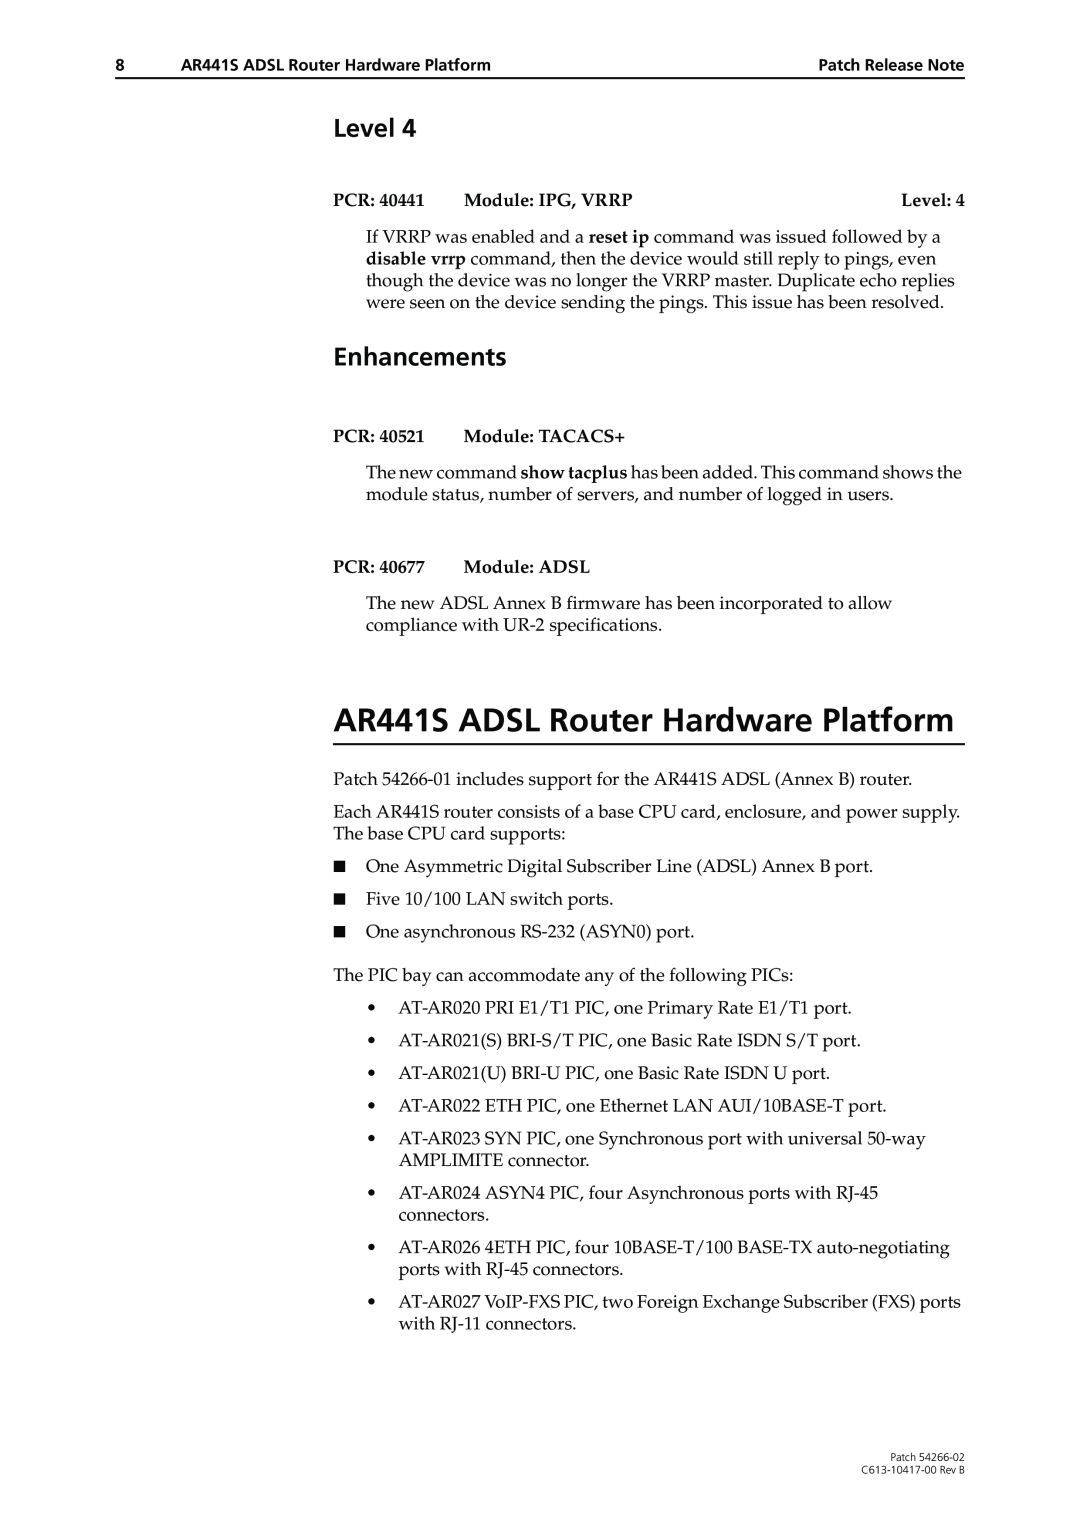 Allied Telesis 54266-02 manual AR441S ADSL Router Hardware Platform, Enhancements, Level 